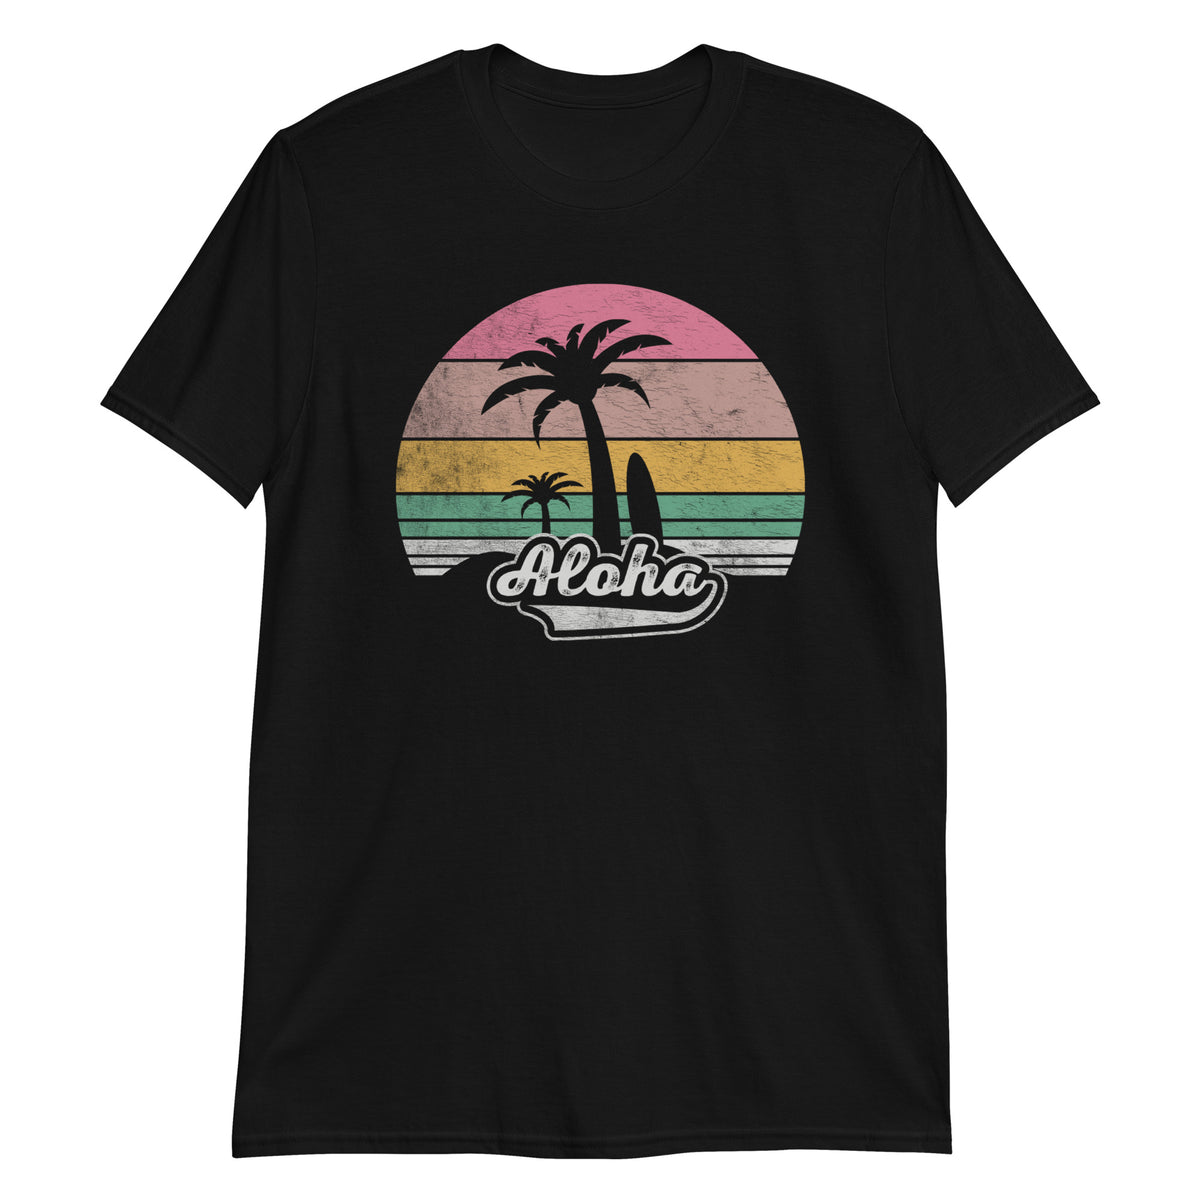 Vintage Retro Aloha Hawaii Hawaiian Island Palm Beach T-Shirt